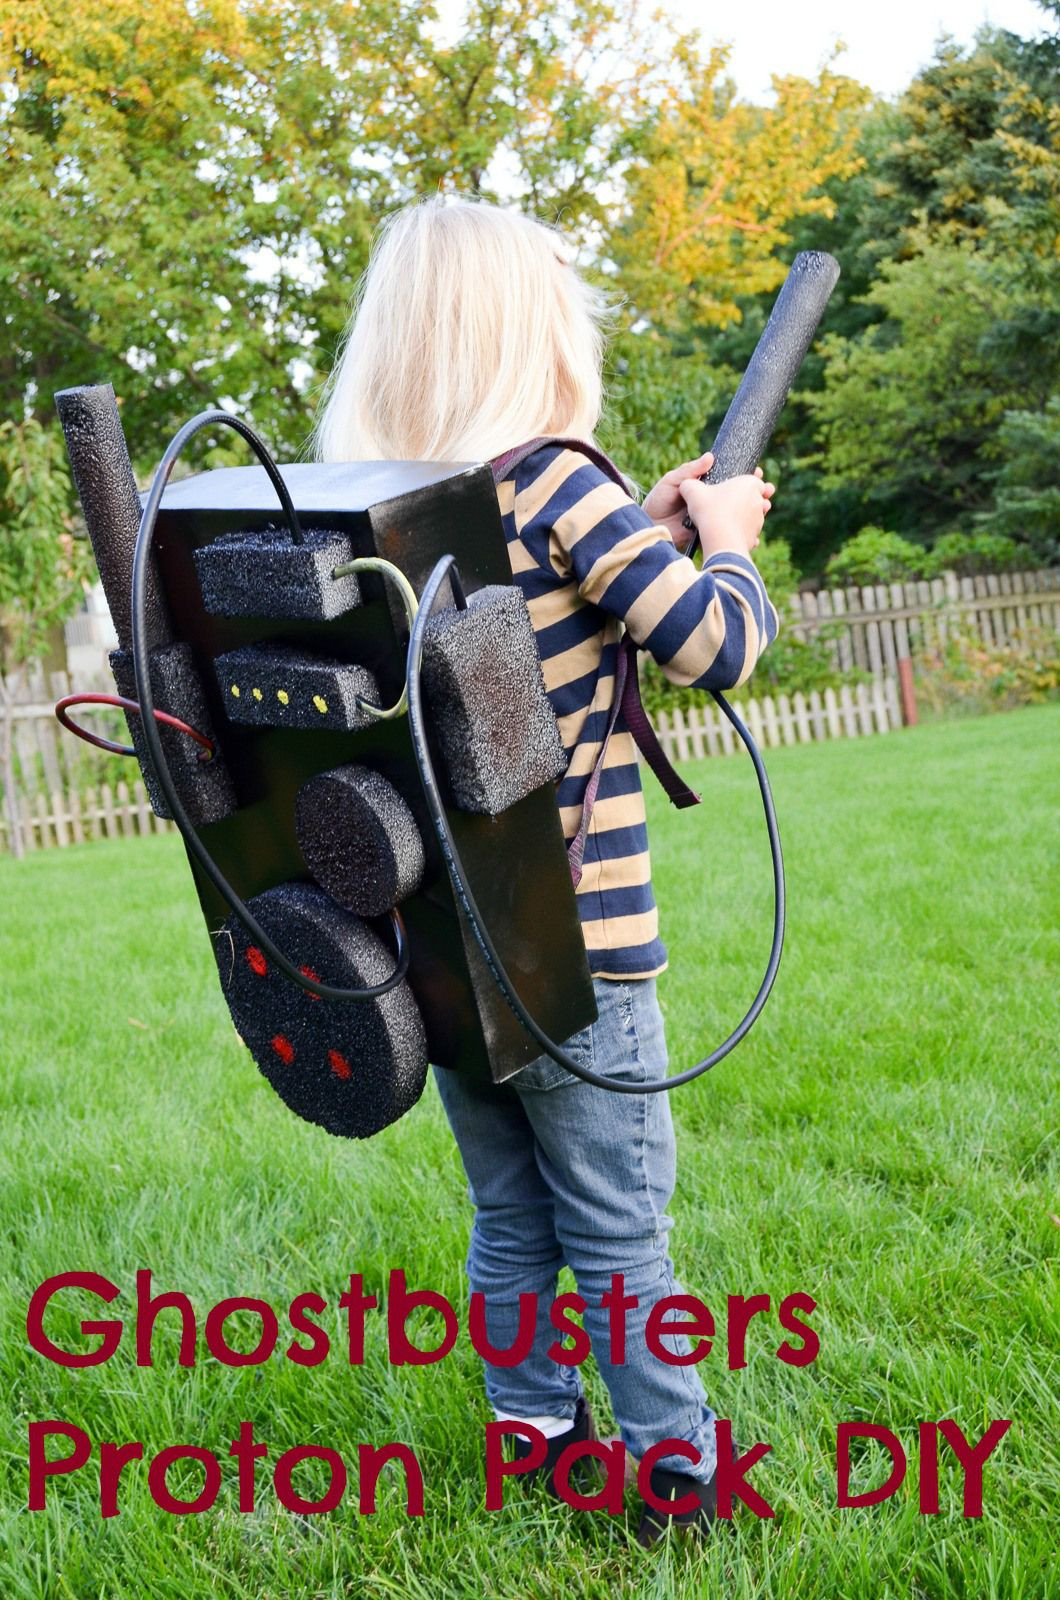 DIY Ghostbusters Costume
 Ghostbusters Proton Pack DIY